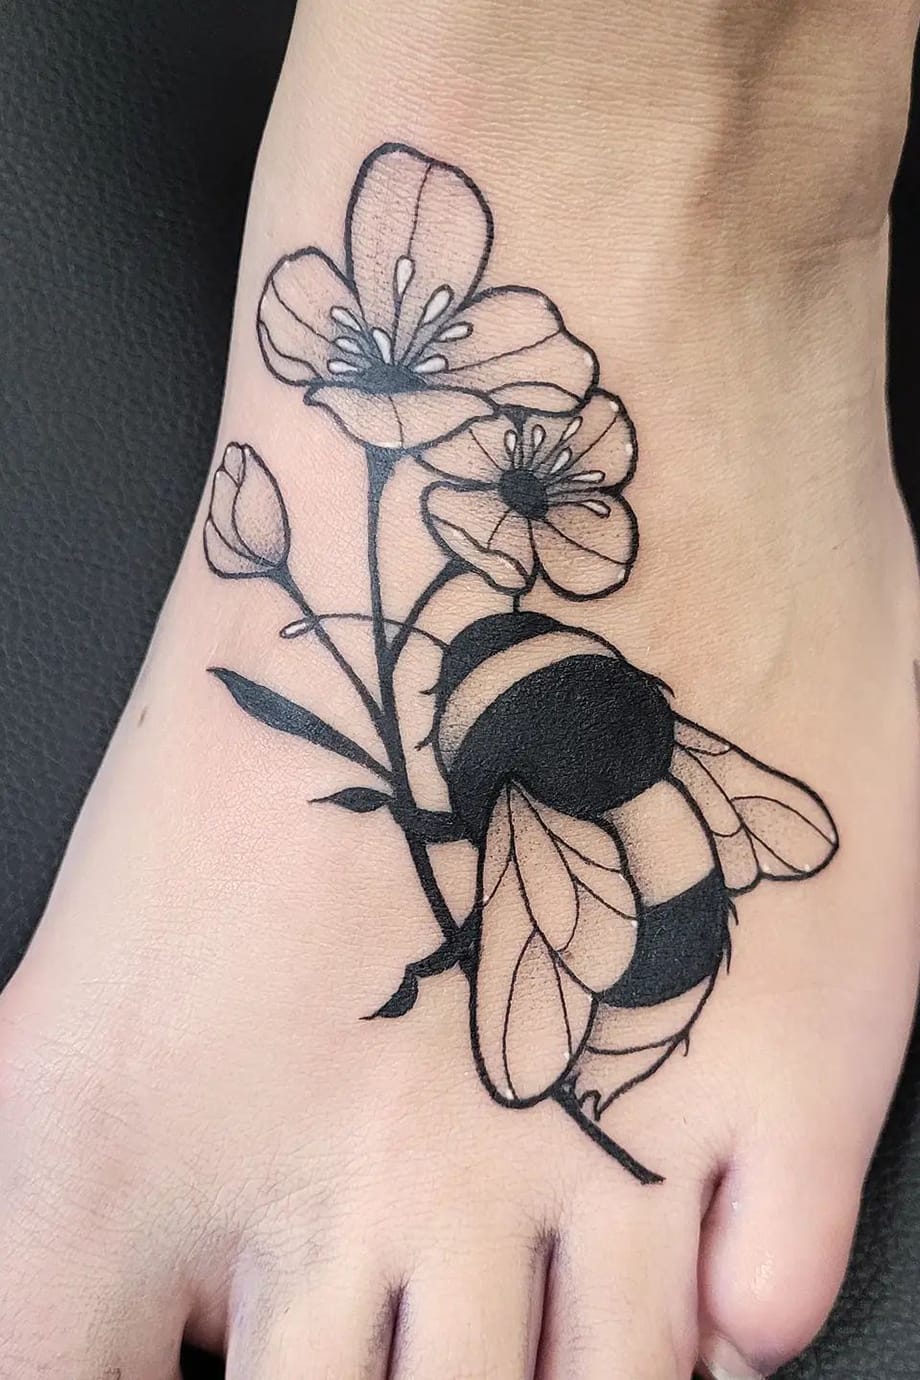 Bee tattoo on foot